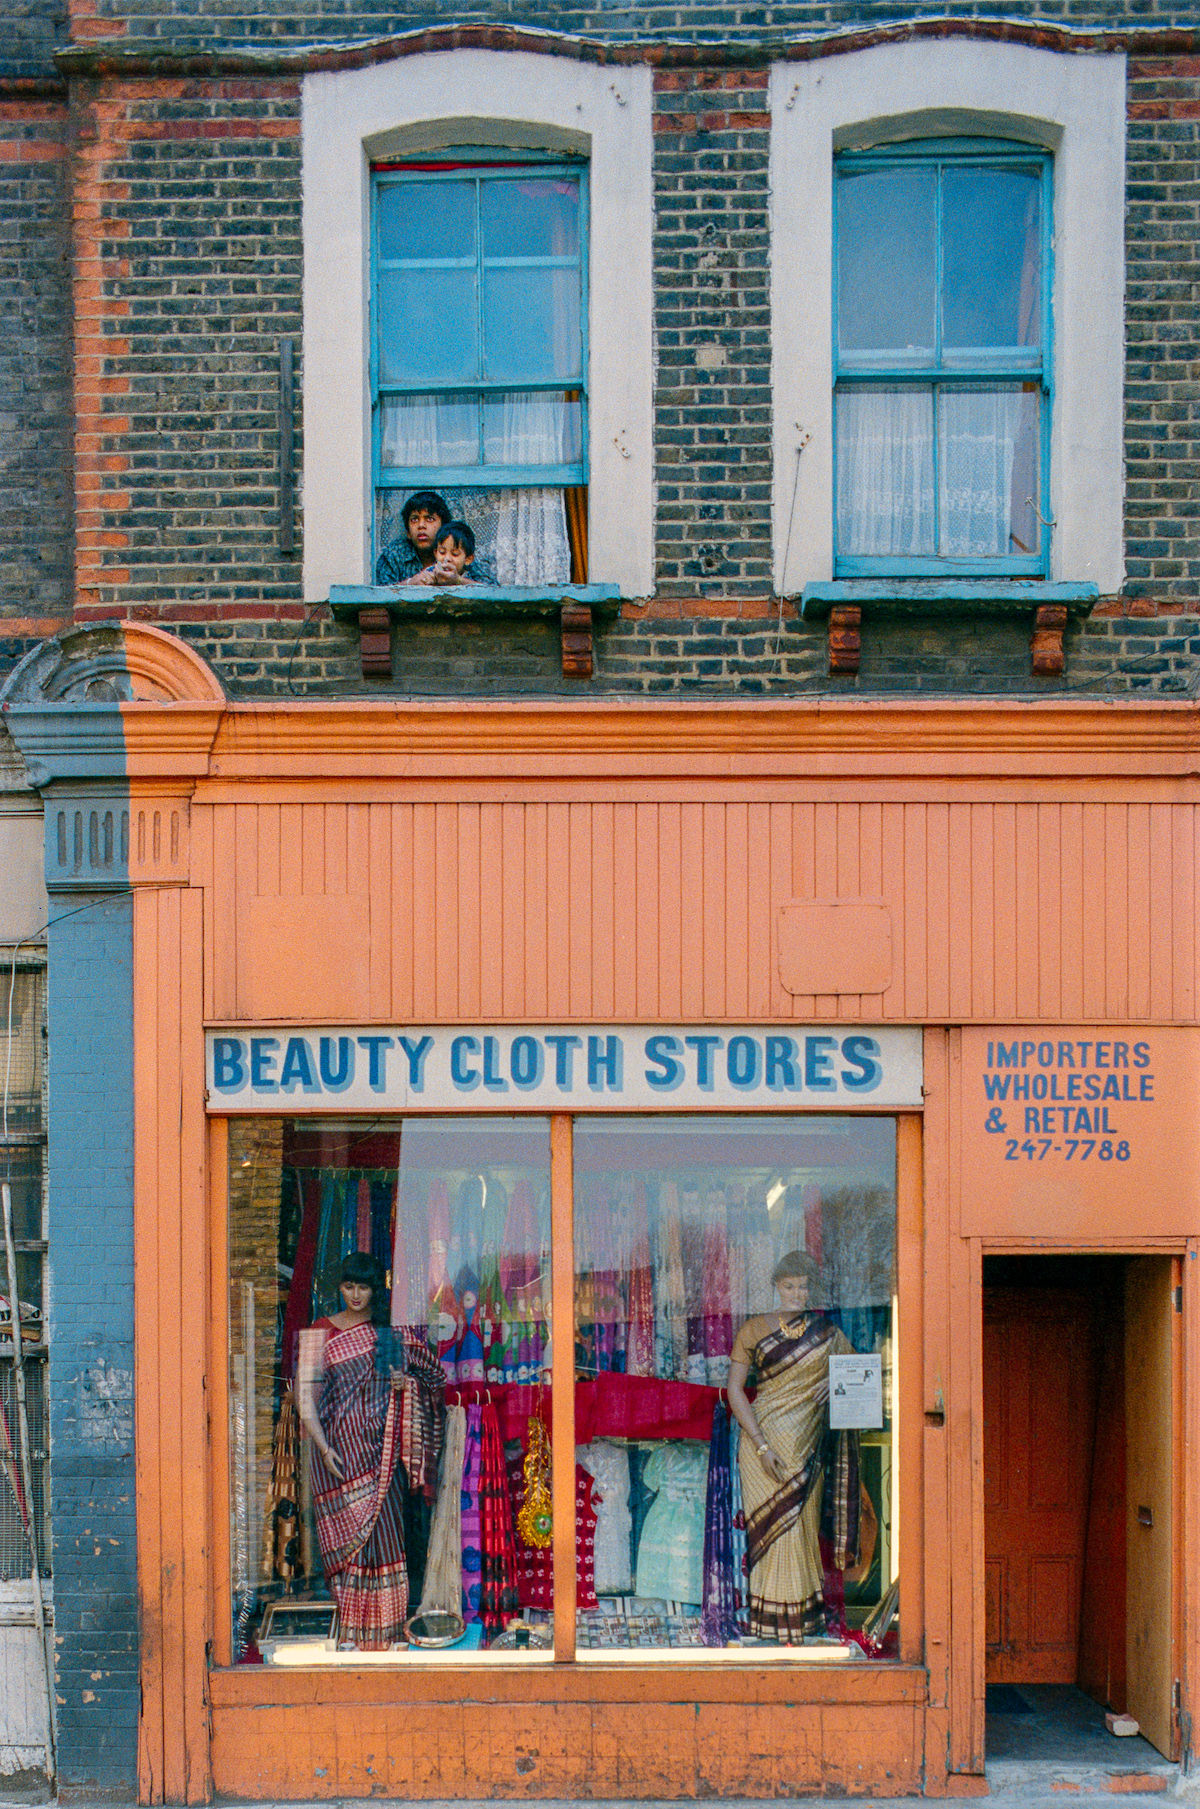 Beauty Cloth Stores, New Road area, Whitechapel, Tower Hamlets, 1986